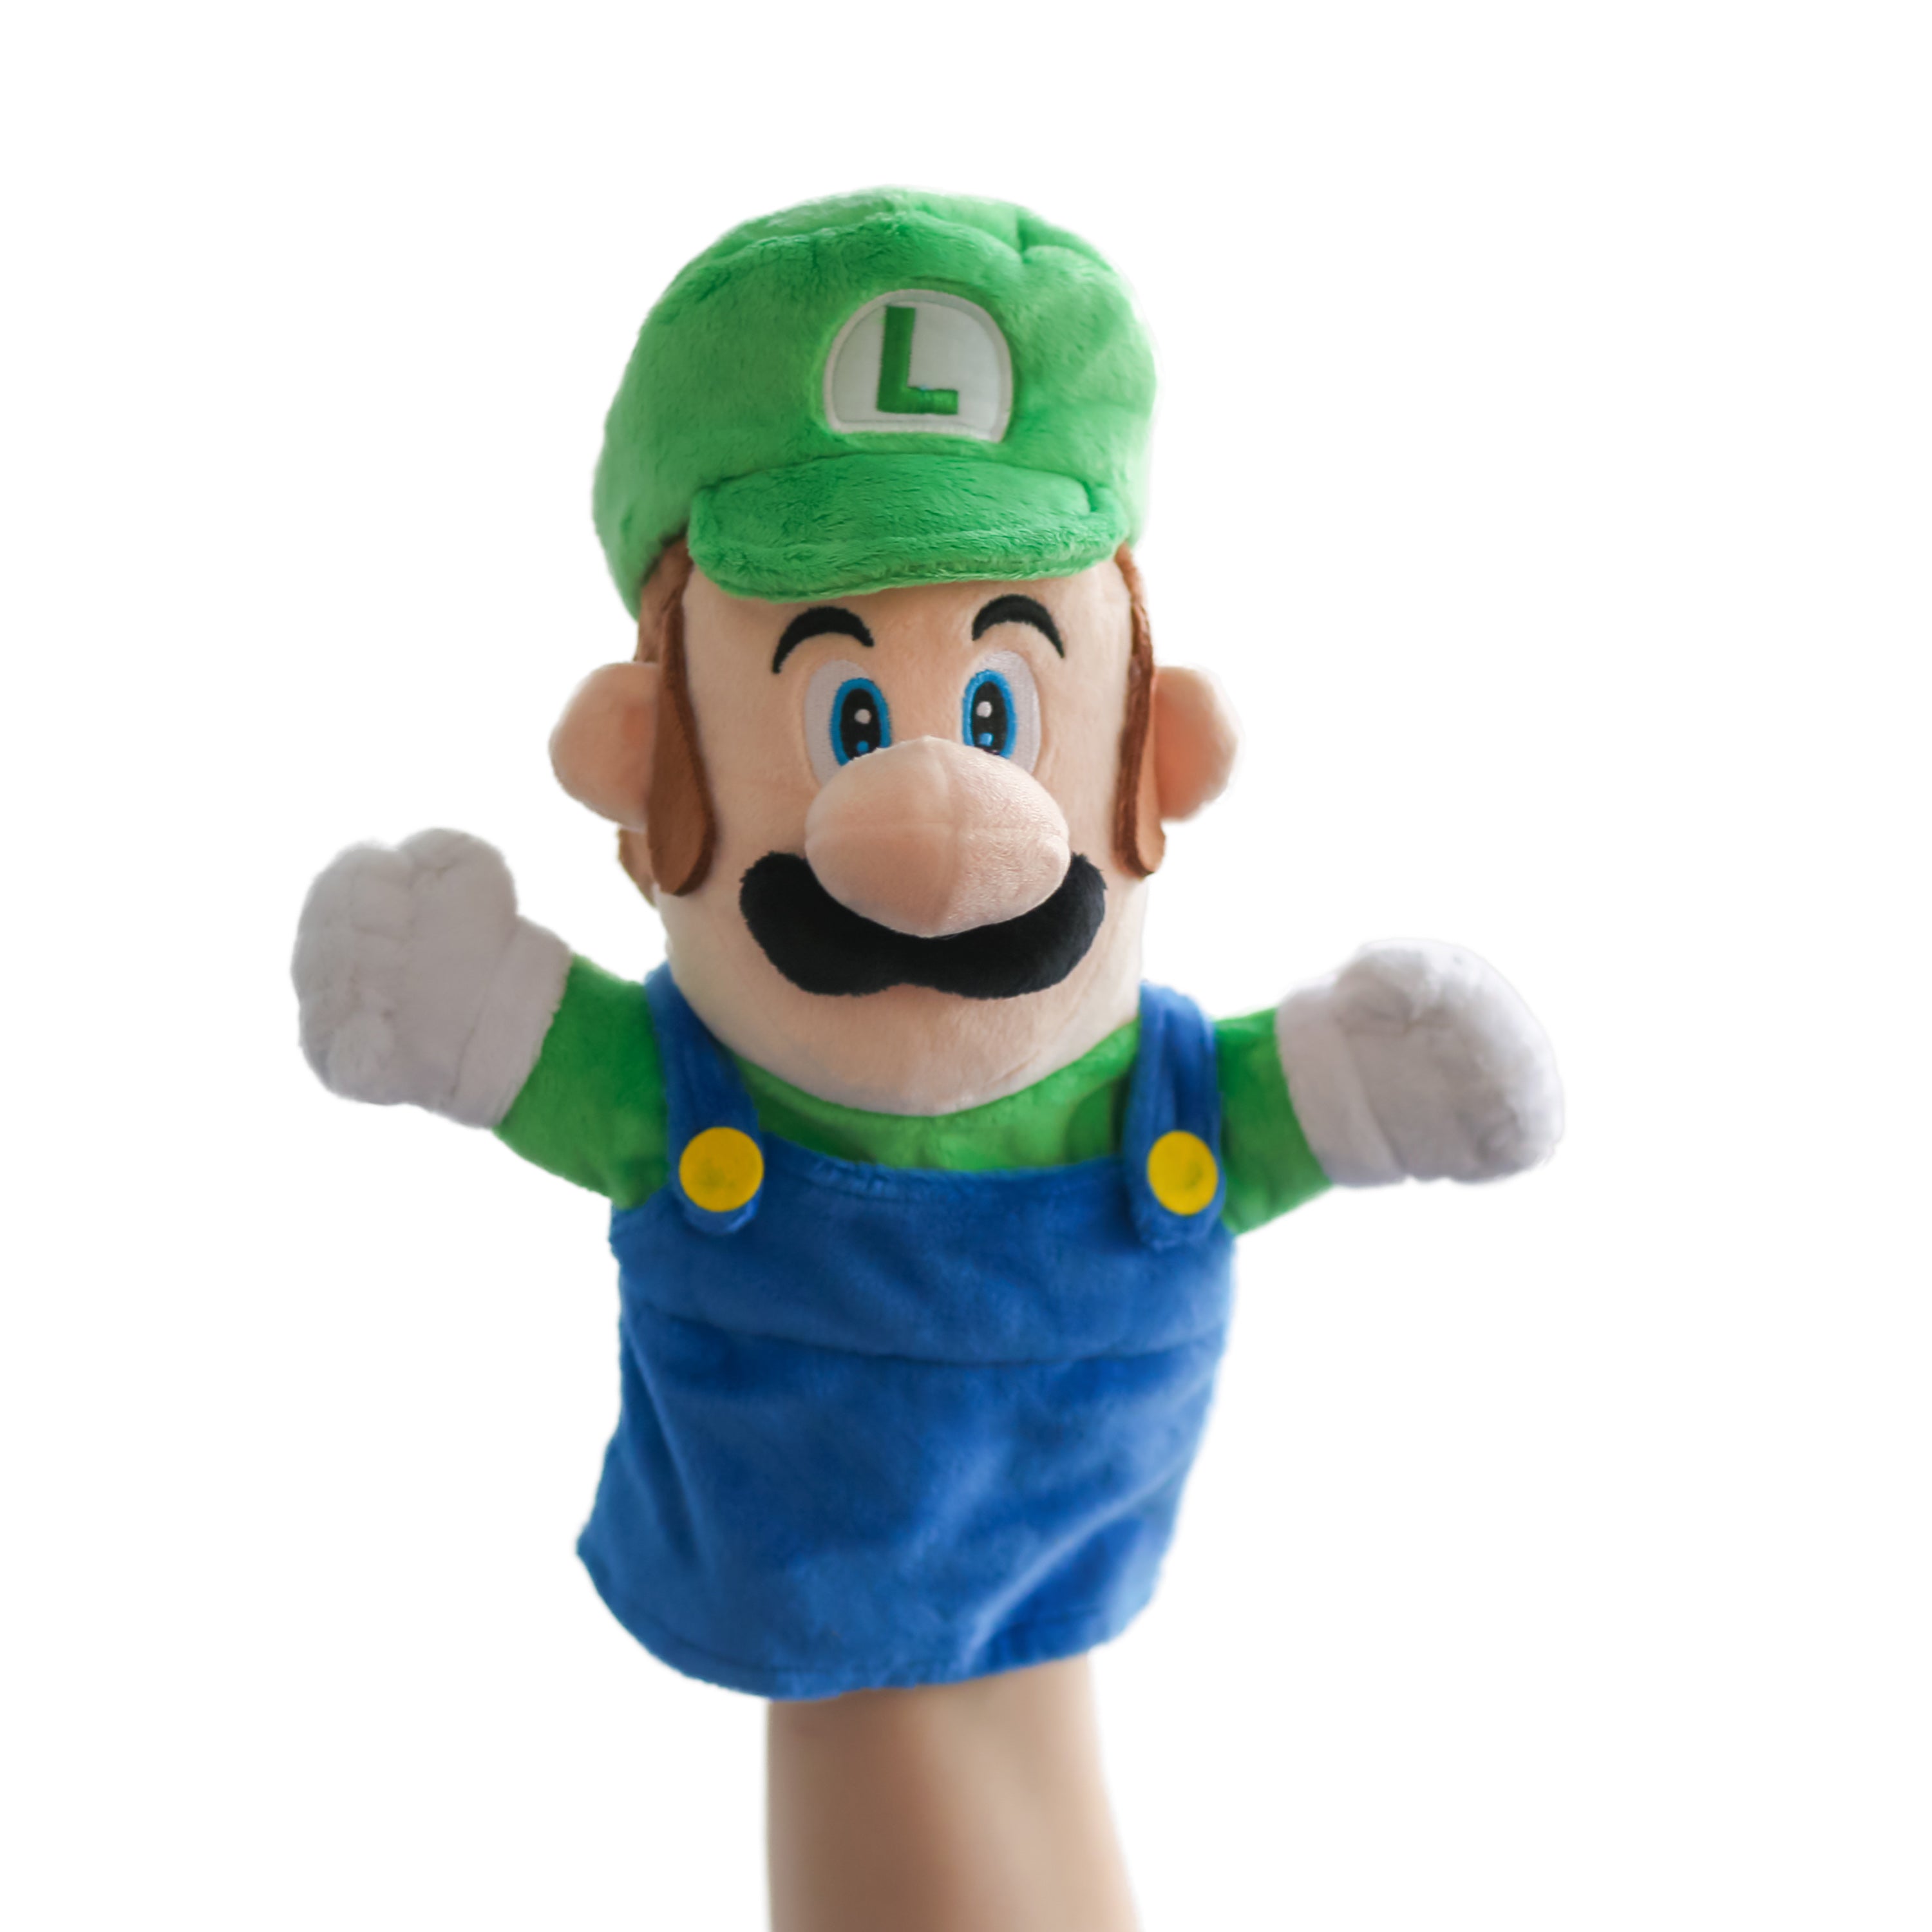 Luigi hand puppet by Uncute